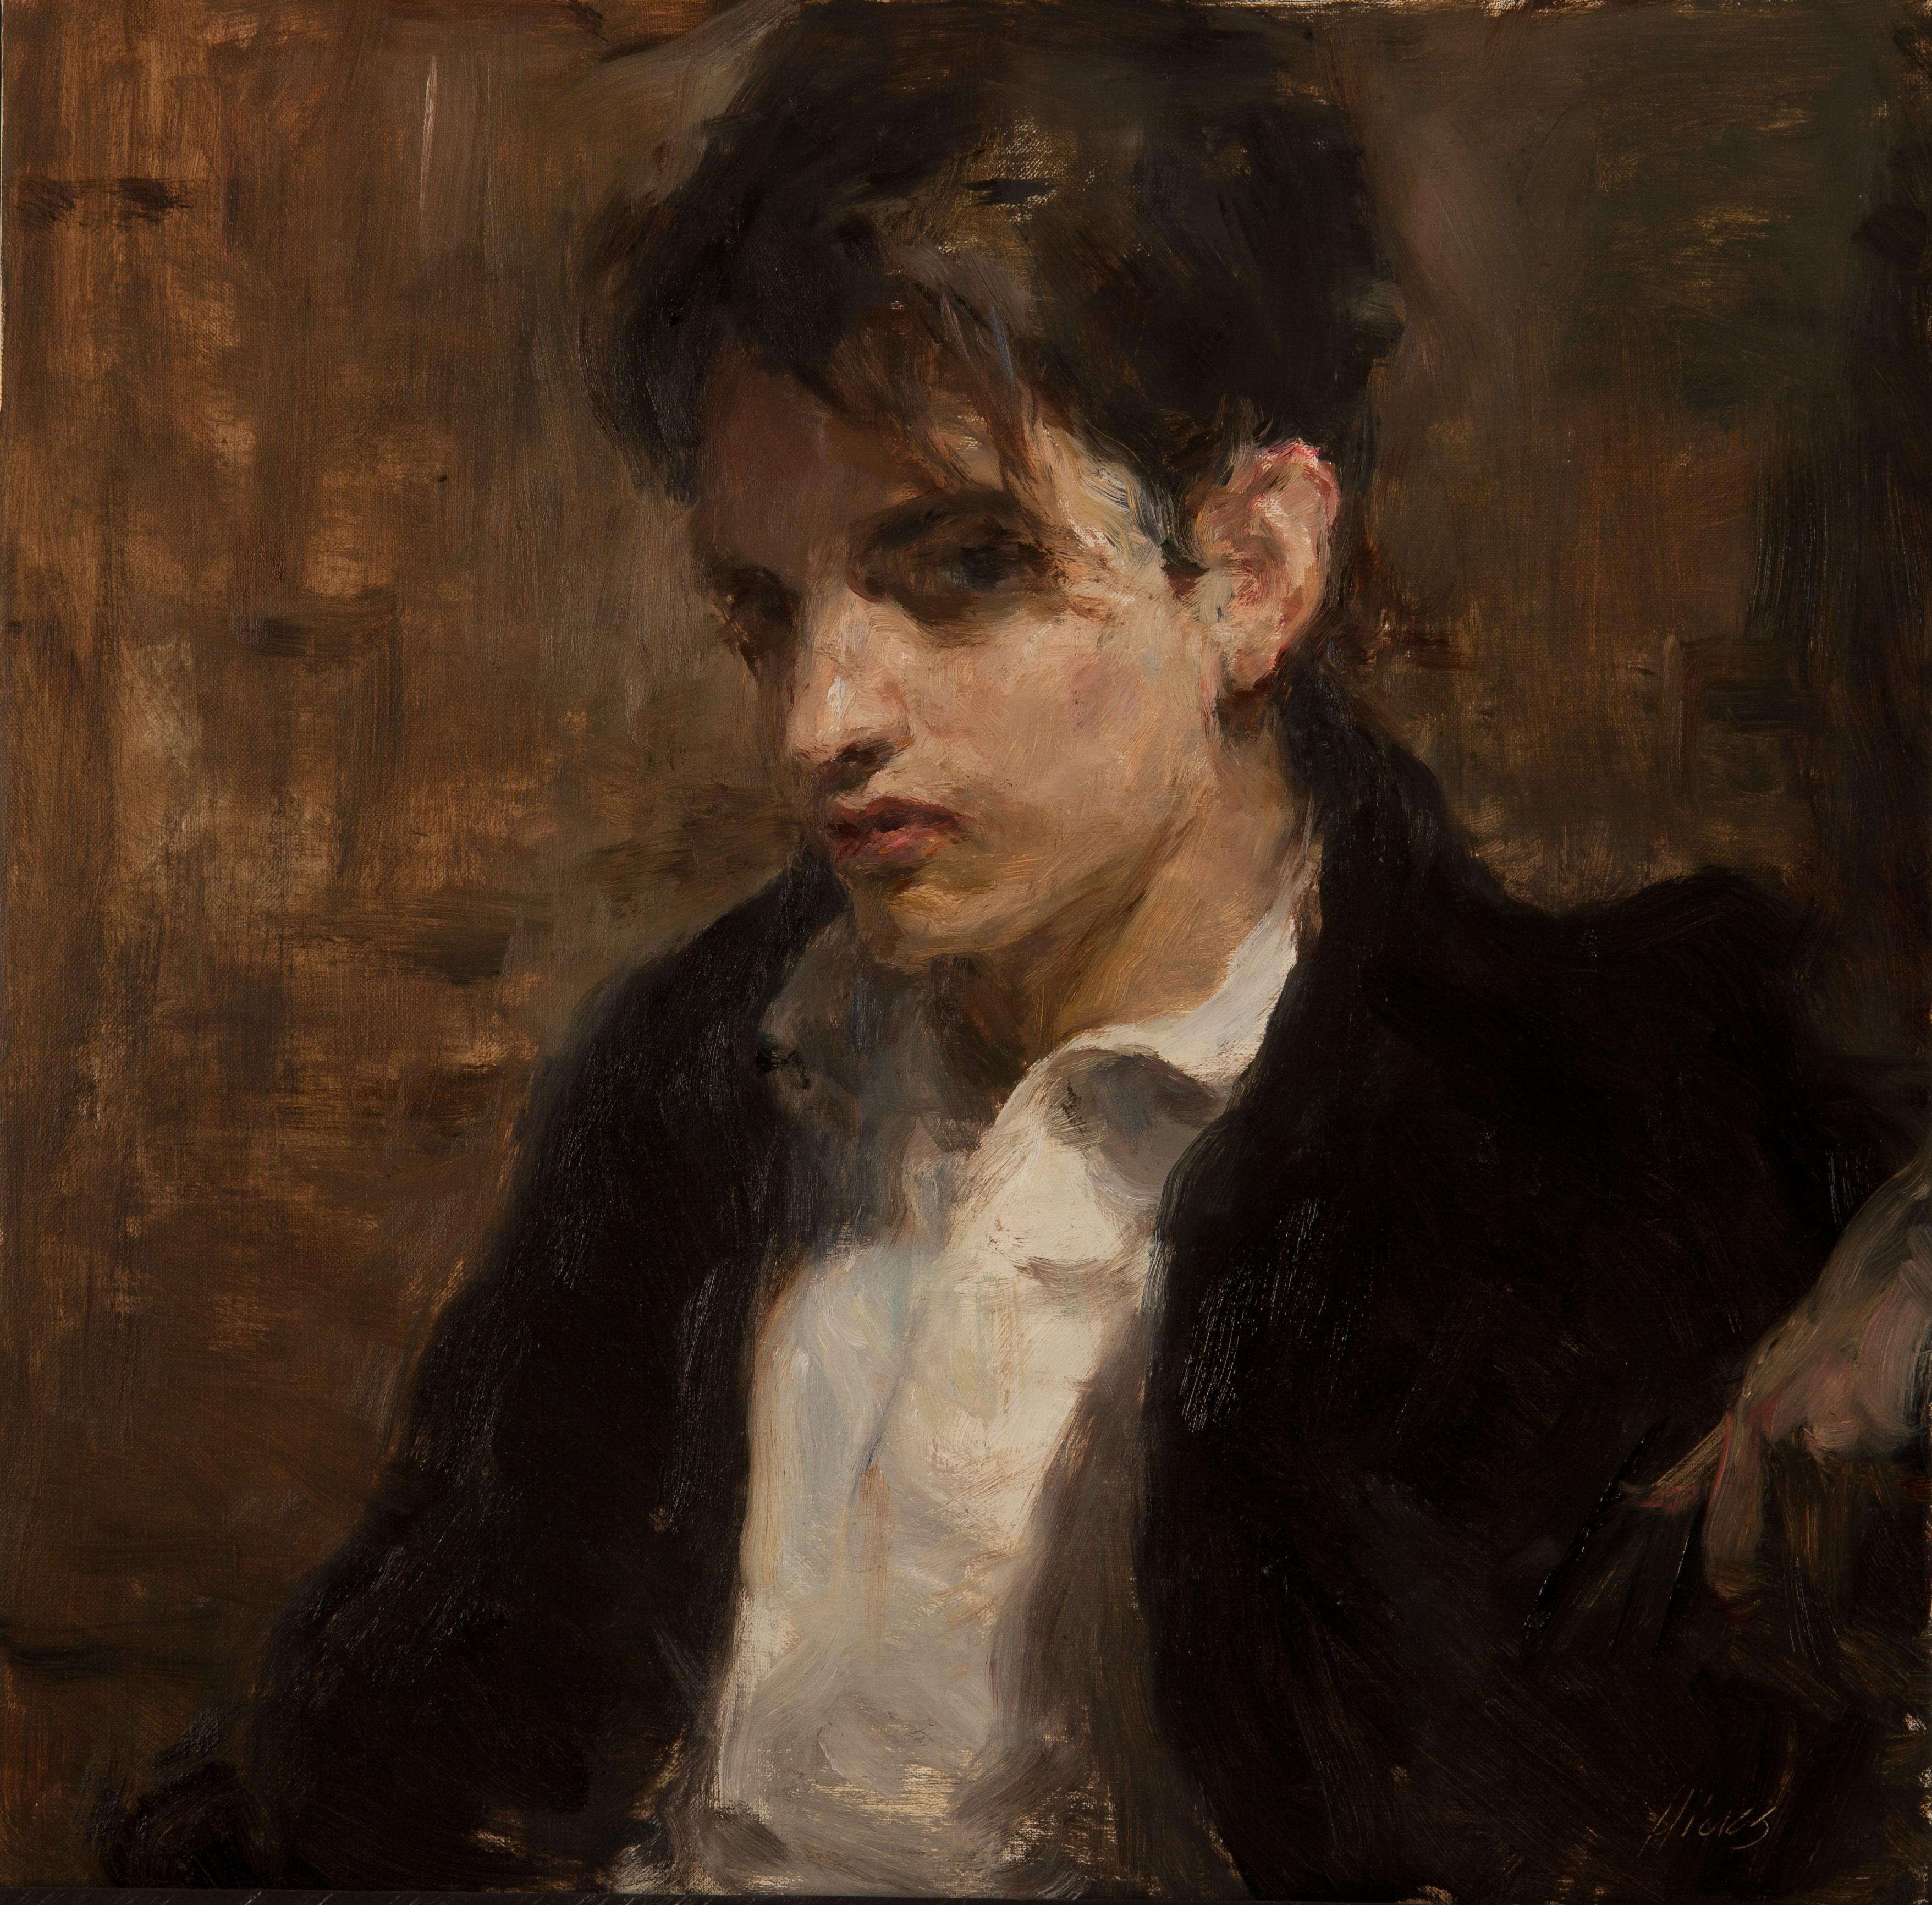 Ron Hicks Portrait Painting - "The Bazaar Contemplator" Oil Painting